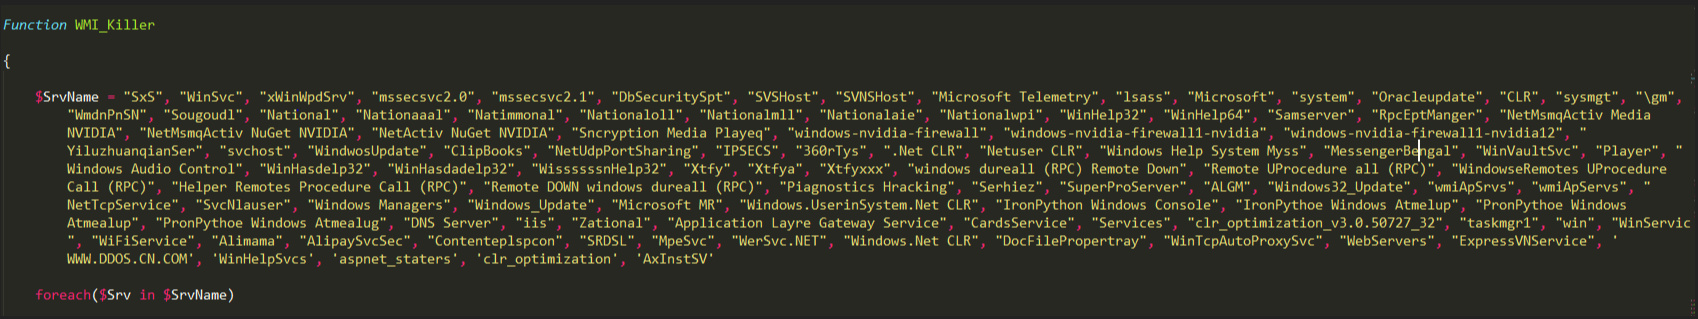 Figure 1. List of service names that WMI_Killer terminates and deletes